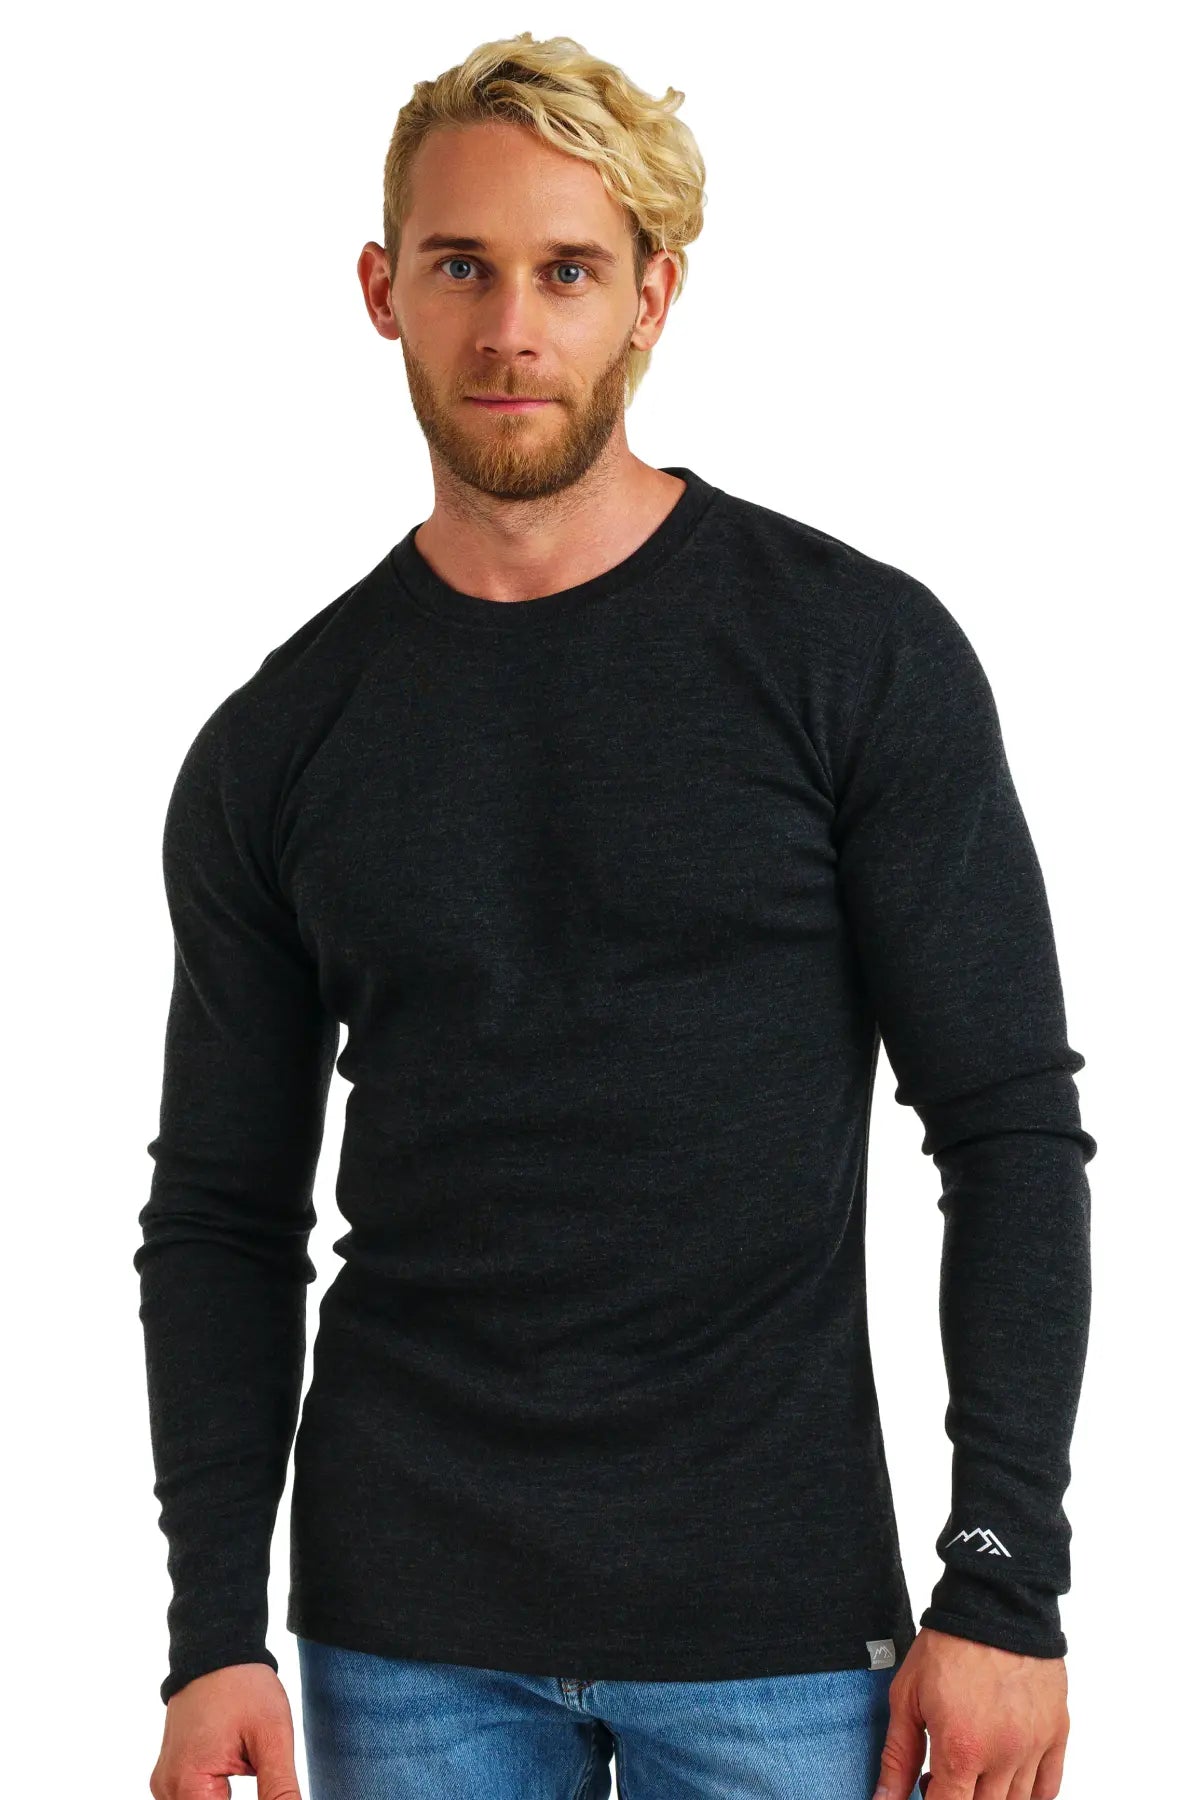 SpiderWire Men's XL/XG 46-48 Grey Long sleeve Dri-More Tech Shirt Fishing -  Helia Beer Co